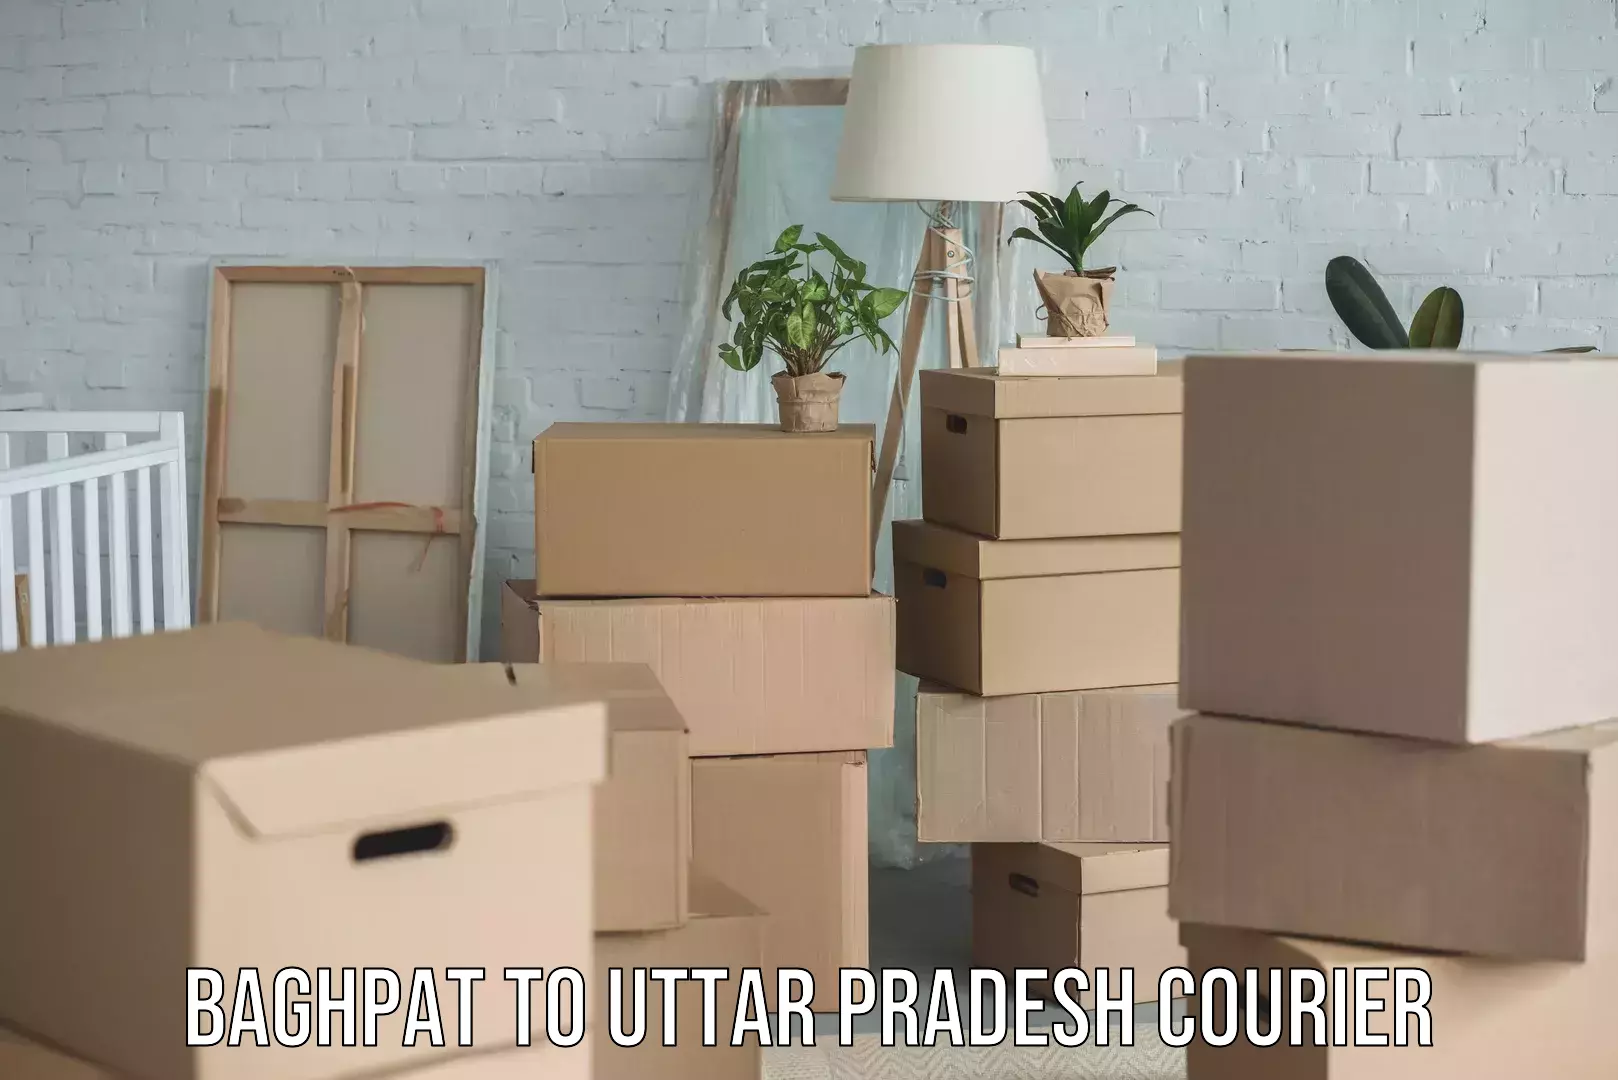 Courier service comparison Baghpat to Uttar Pradesh